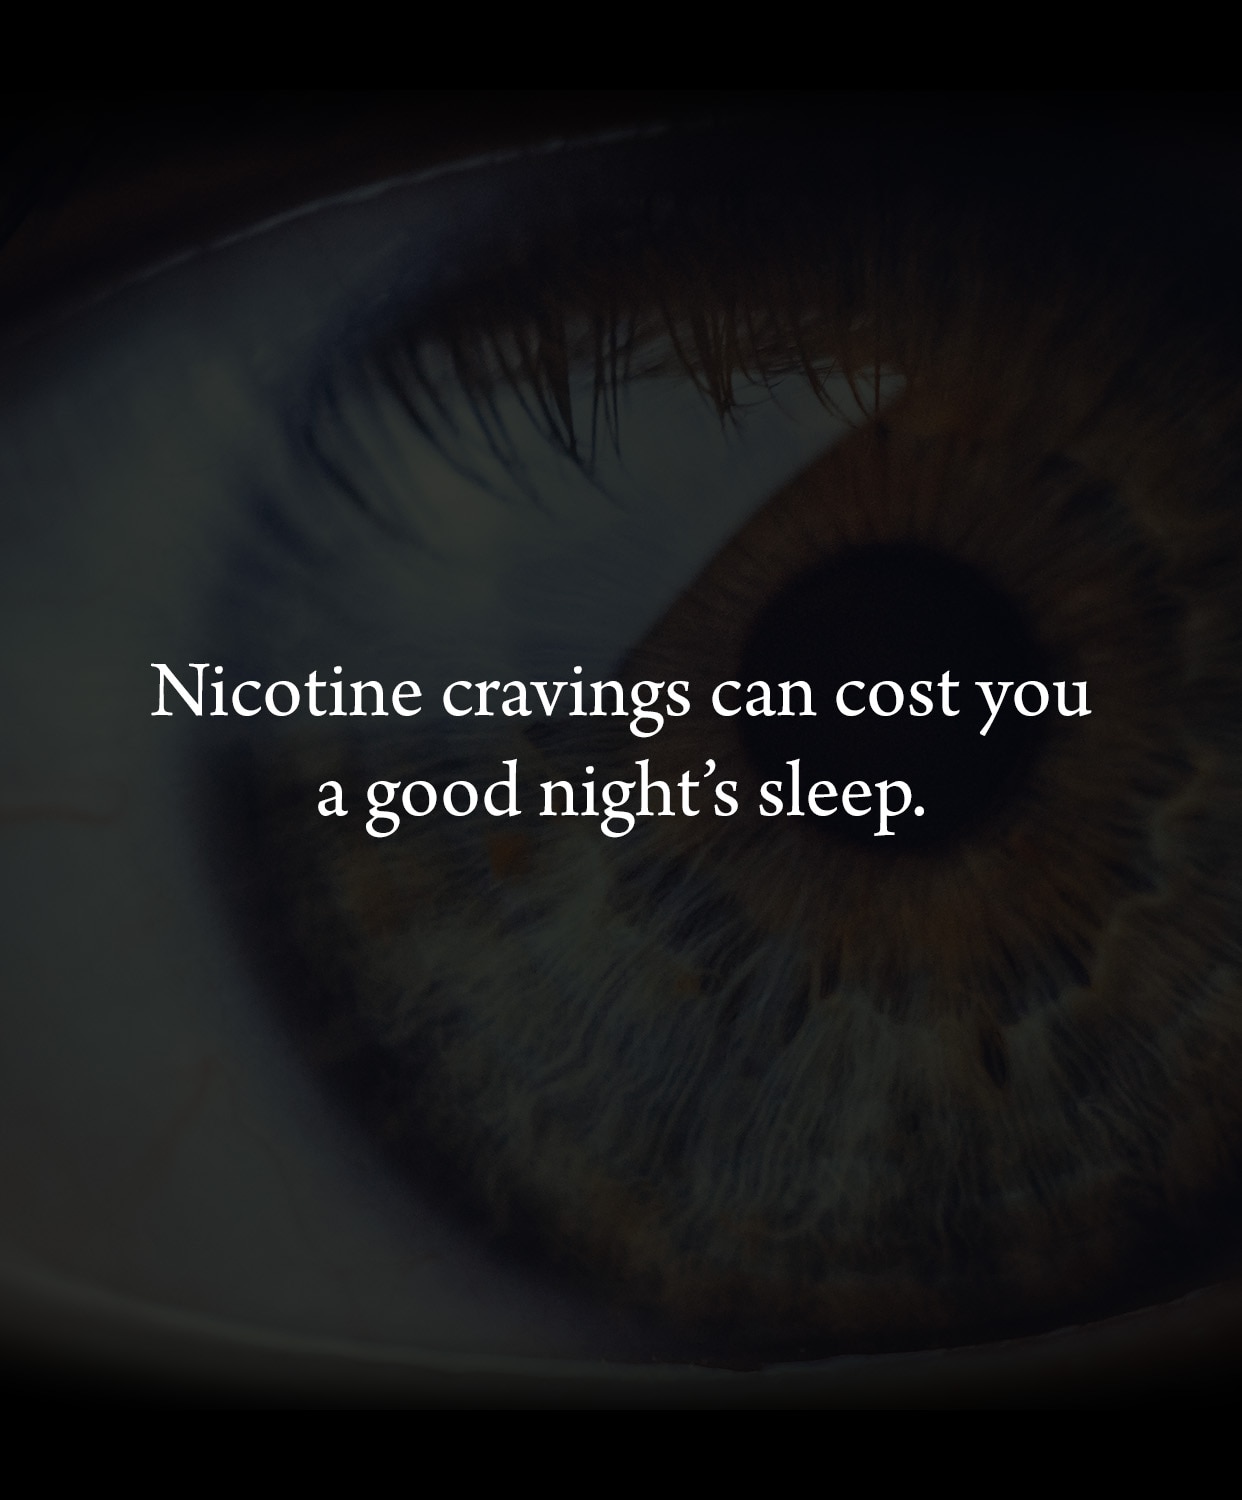 Nicotine cravings can cost you a good night’s sleep.